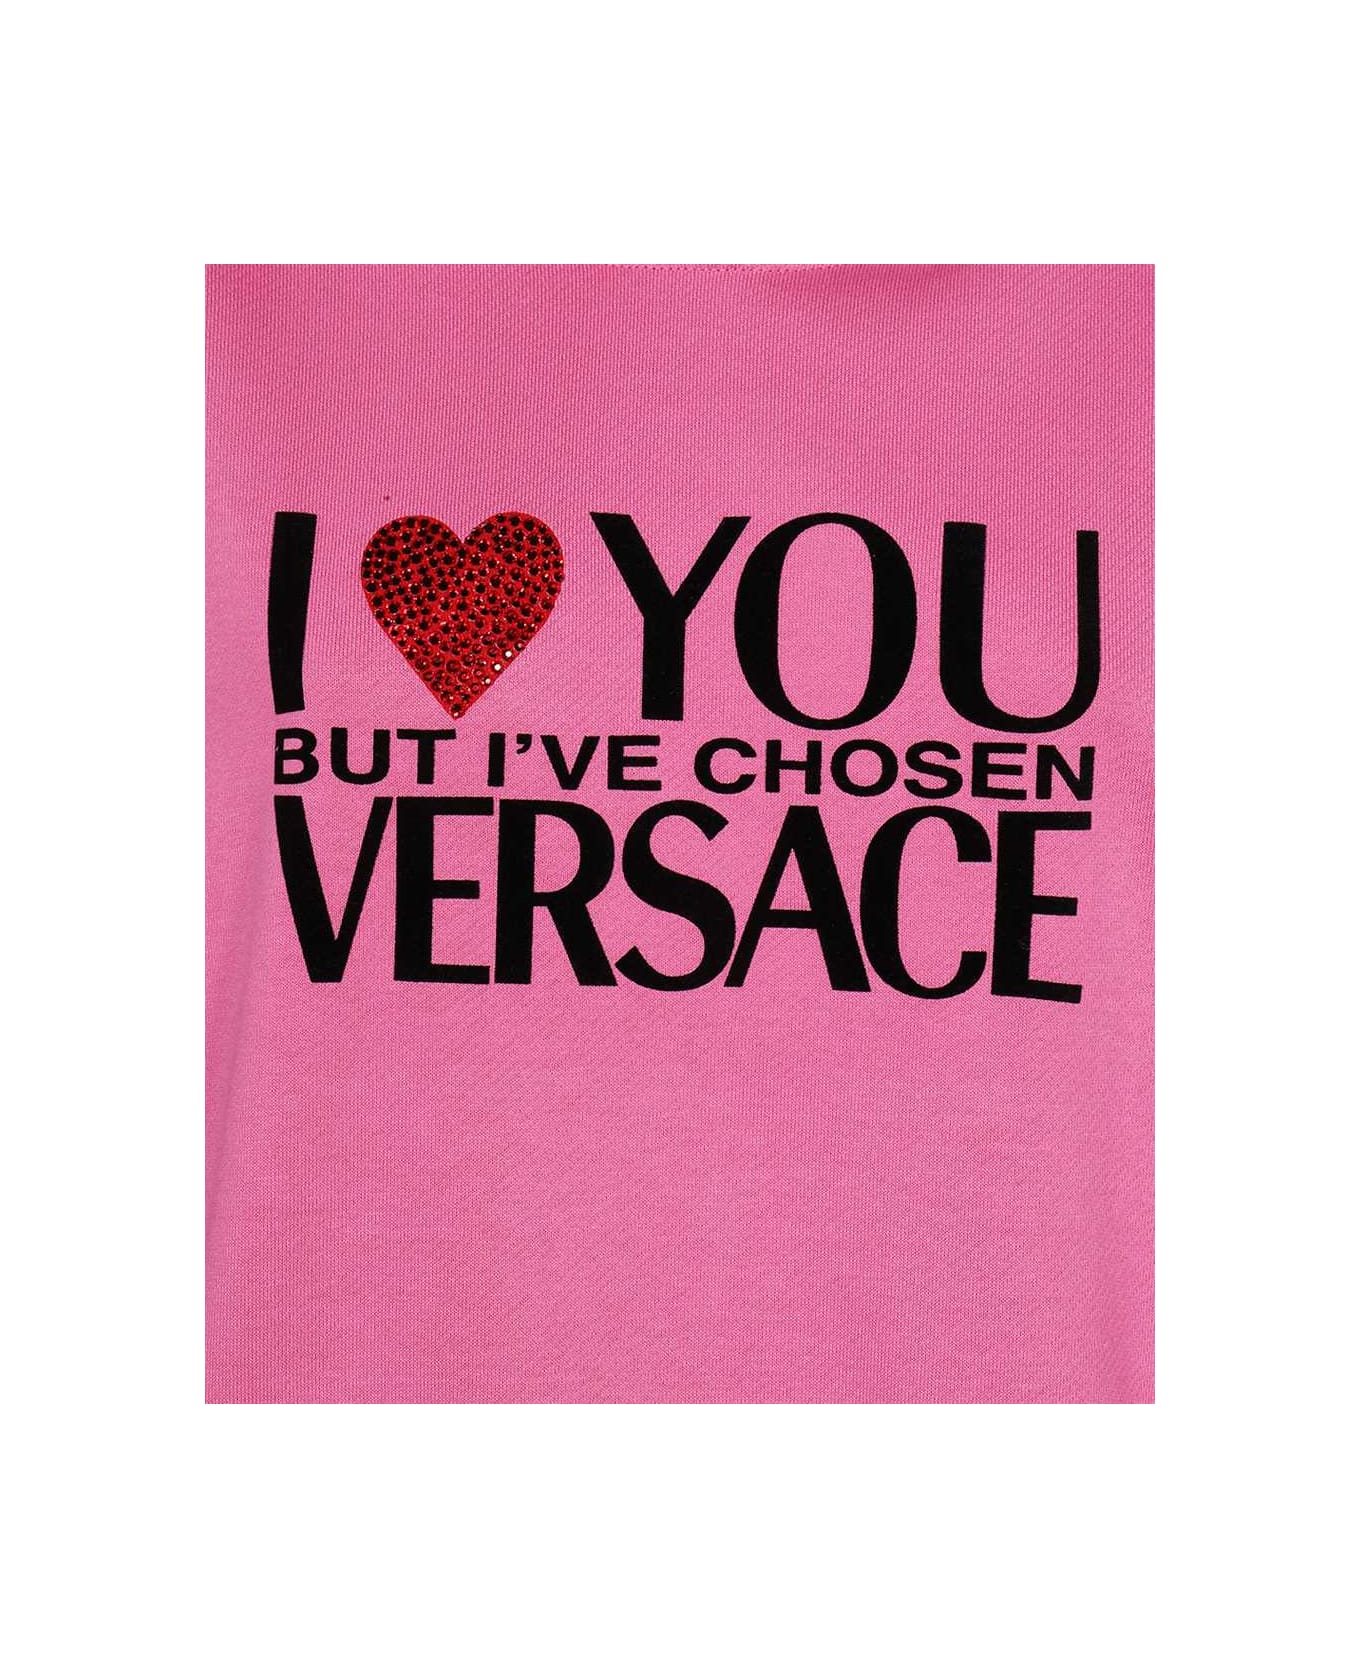 Versace Cotton Hoodie - Pink